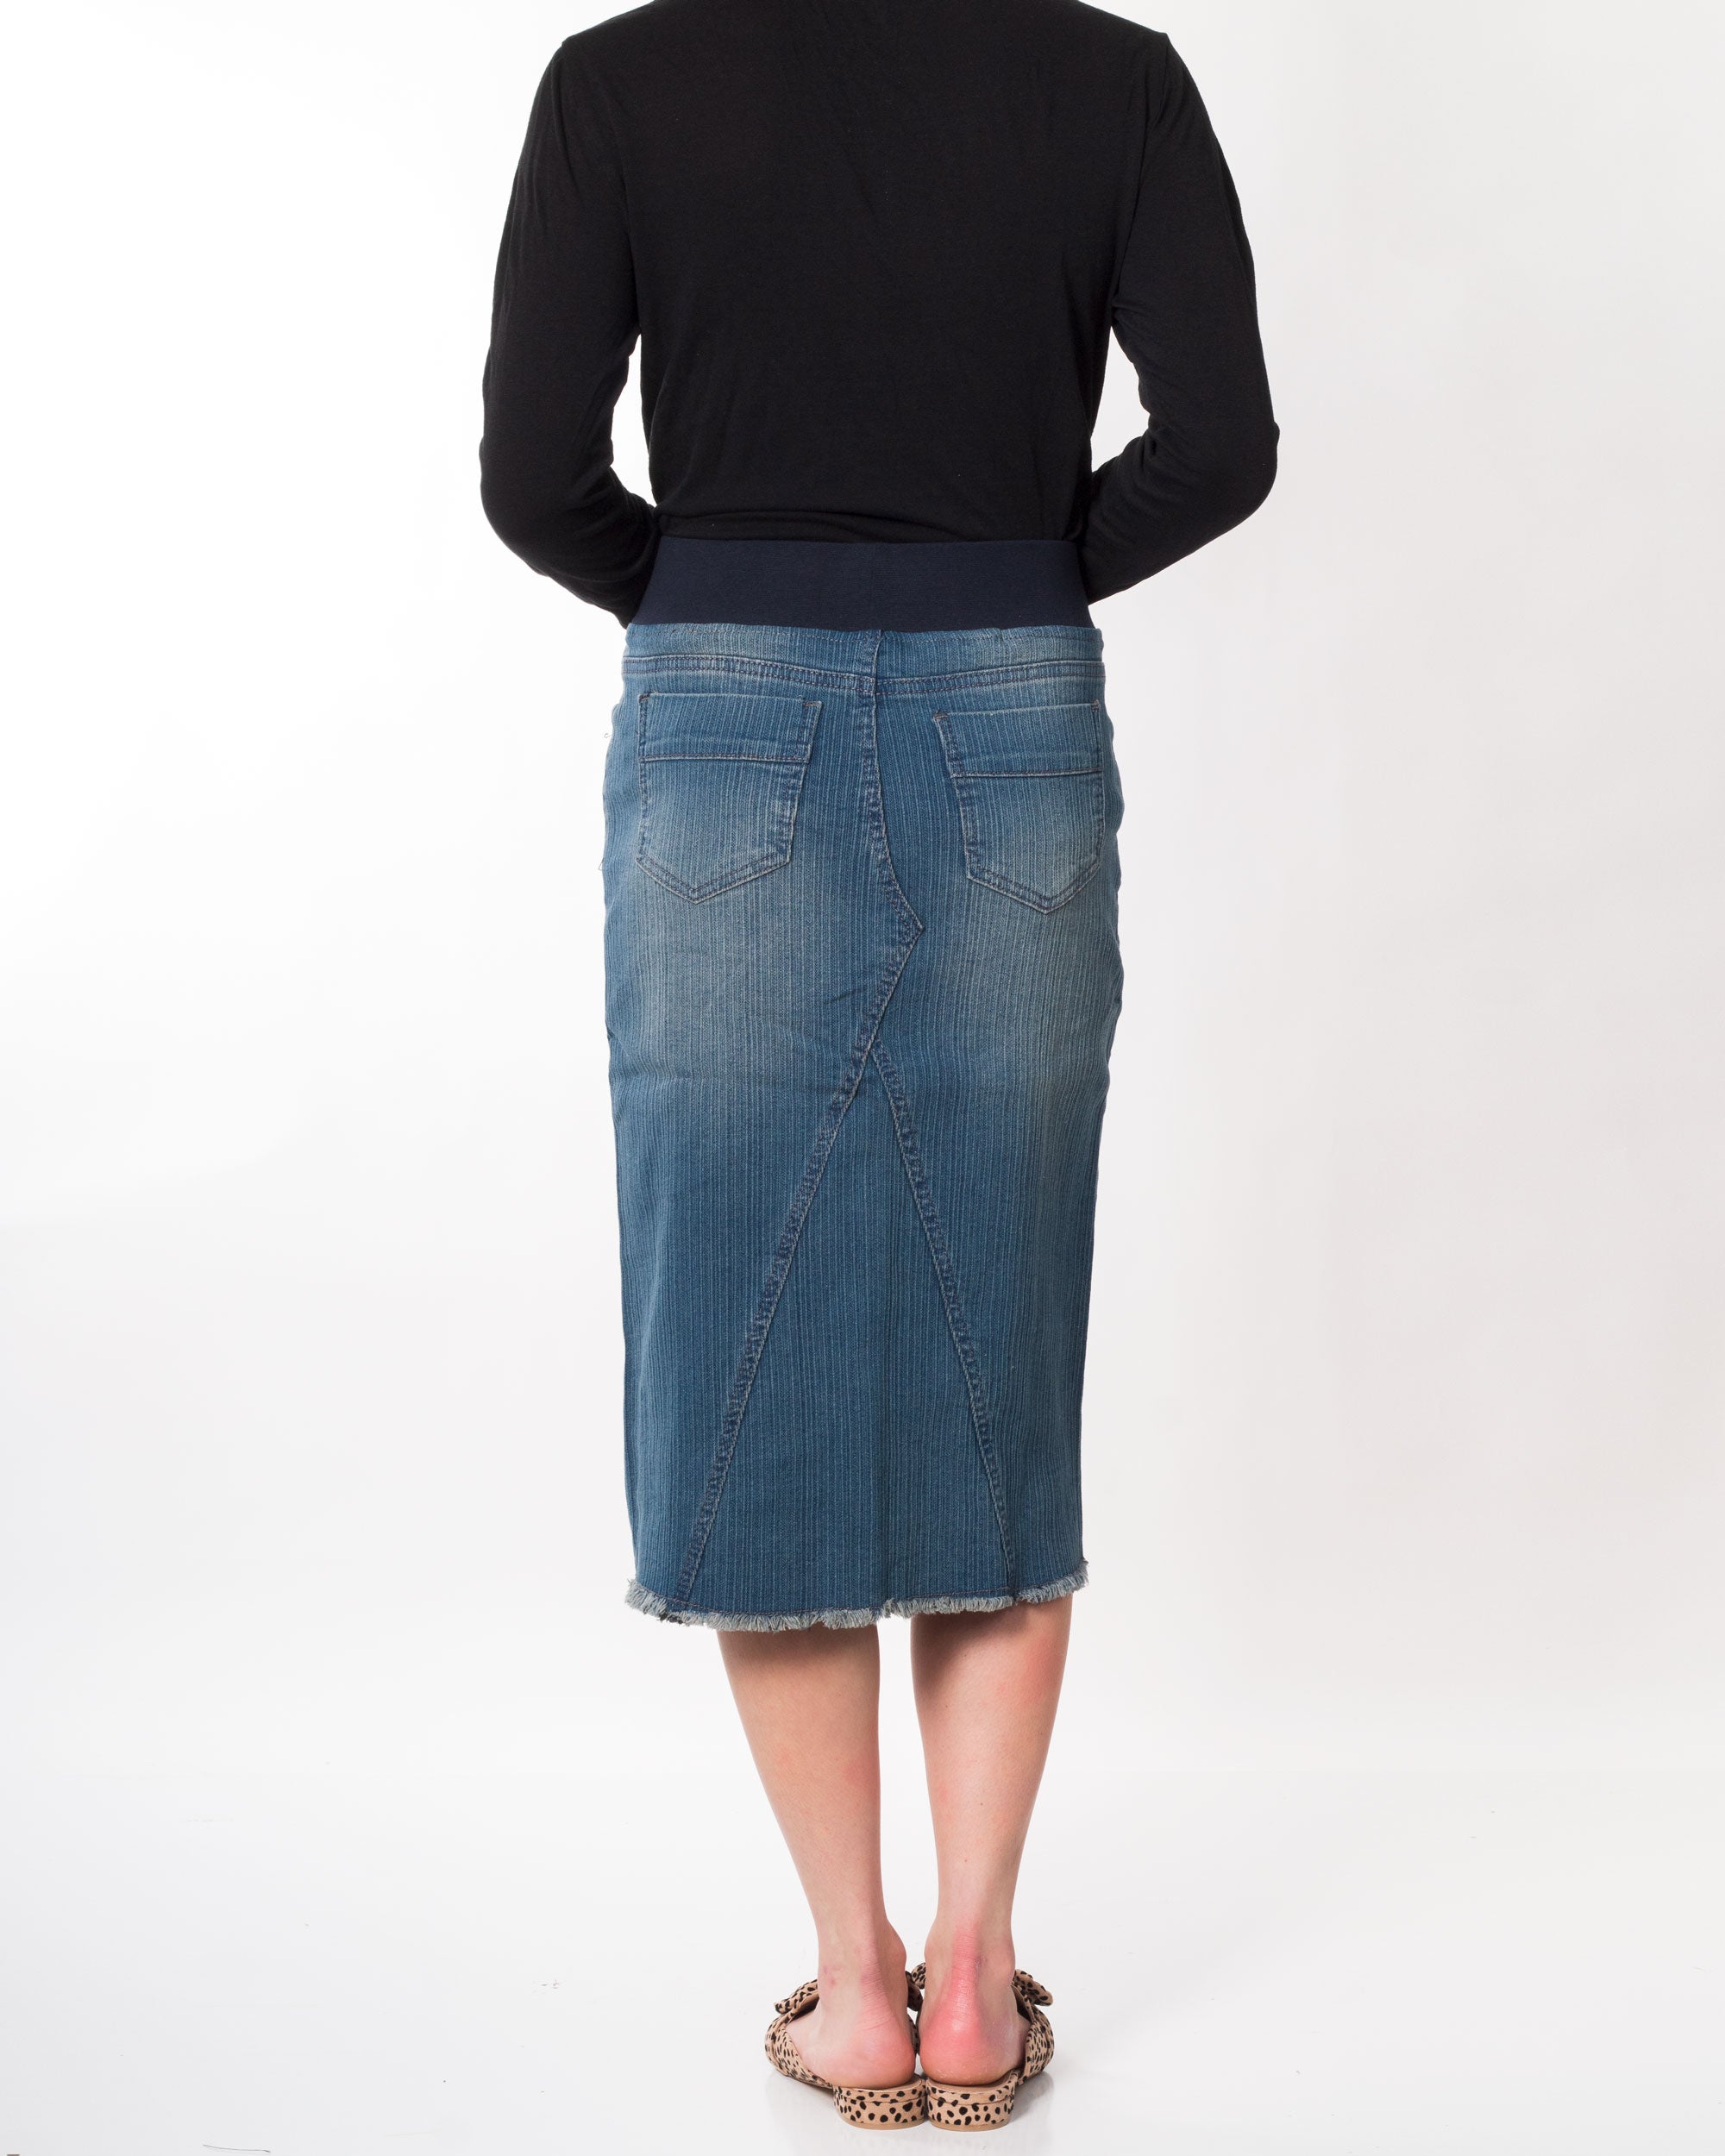 Amelia's Denim Skirt